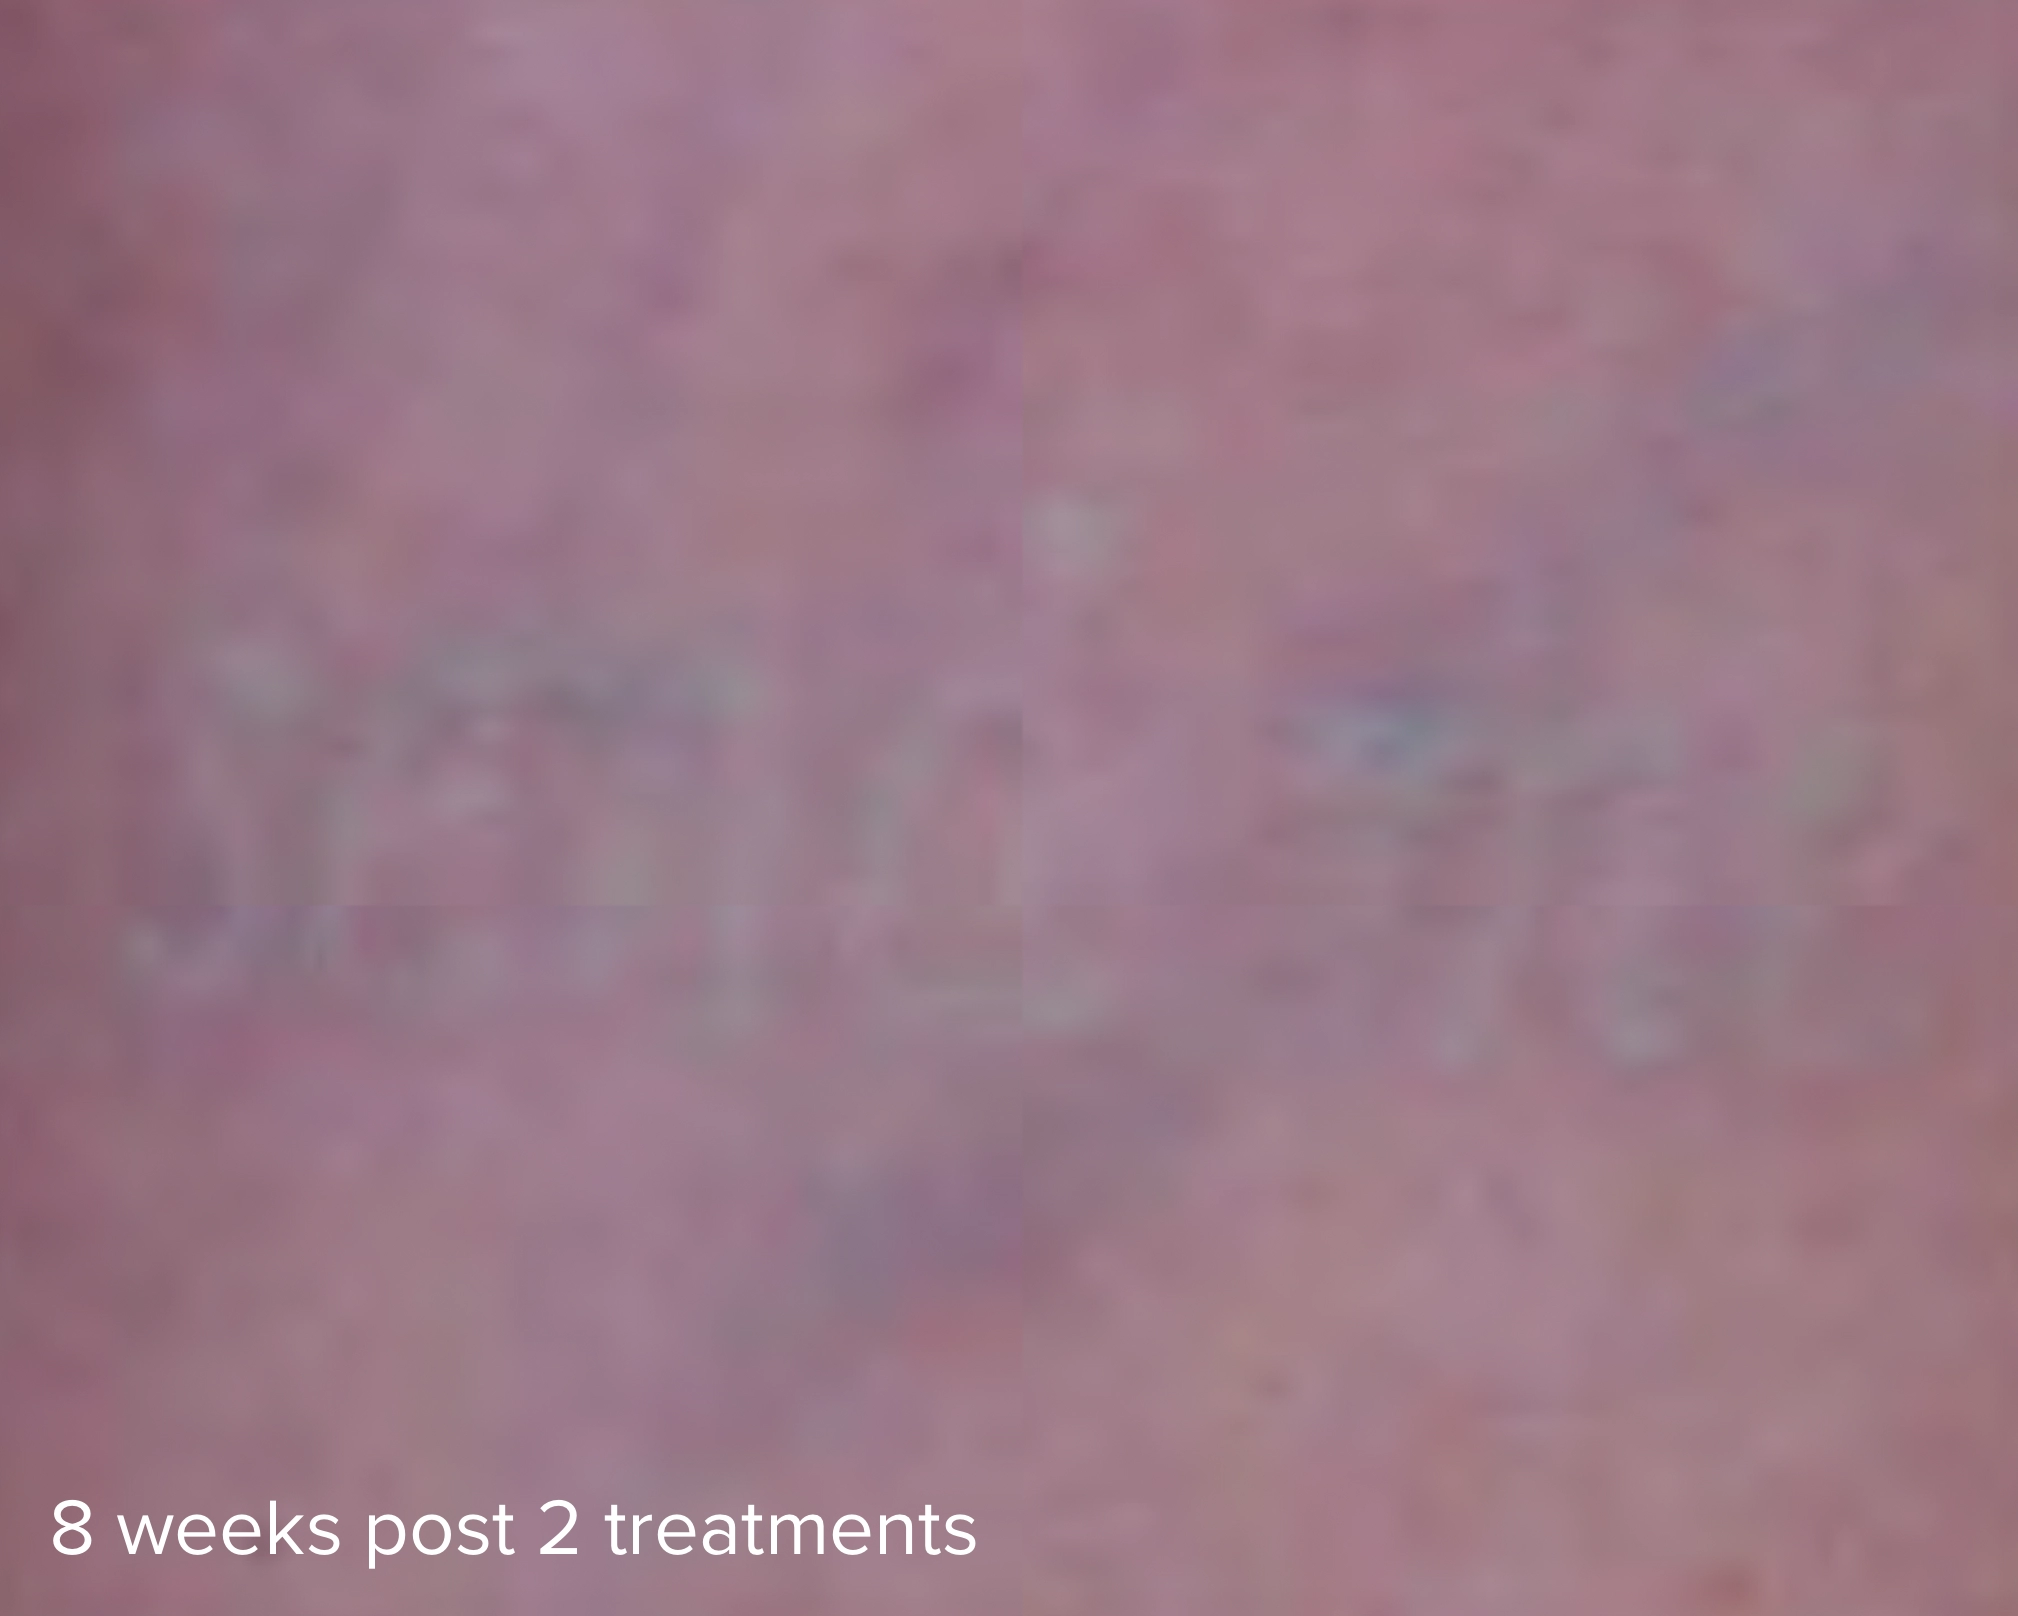 Laser Tattoo Removal 785 8 Week Post 2 Treatments